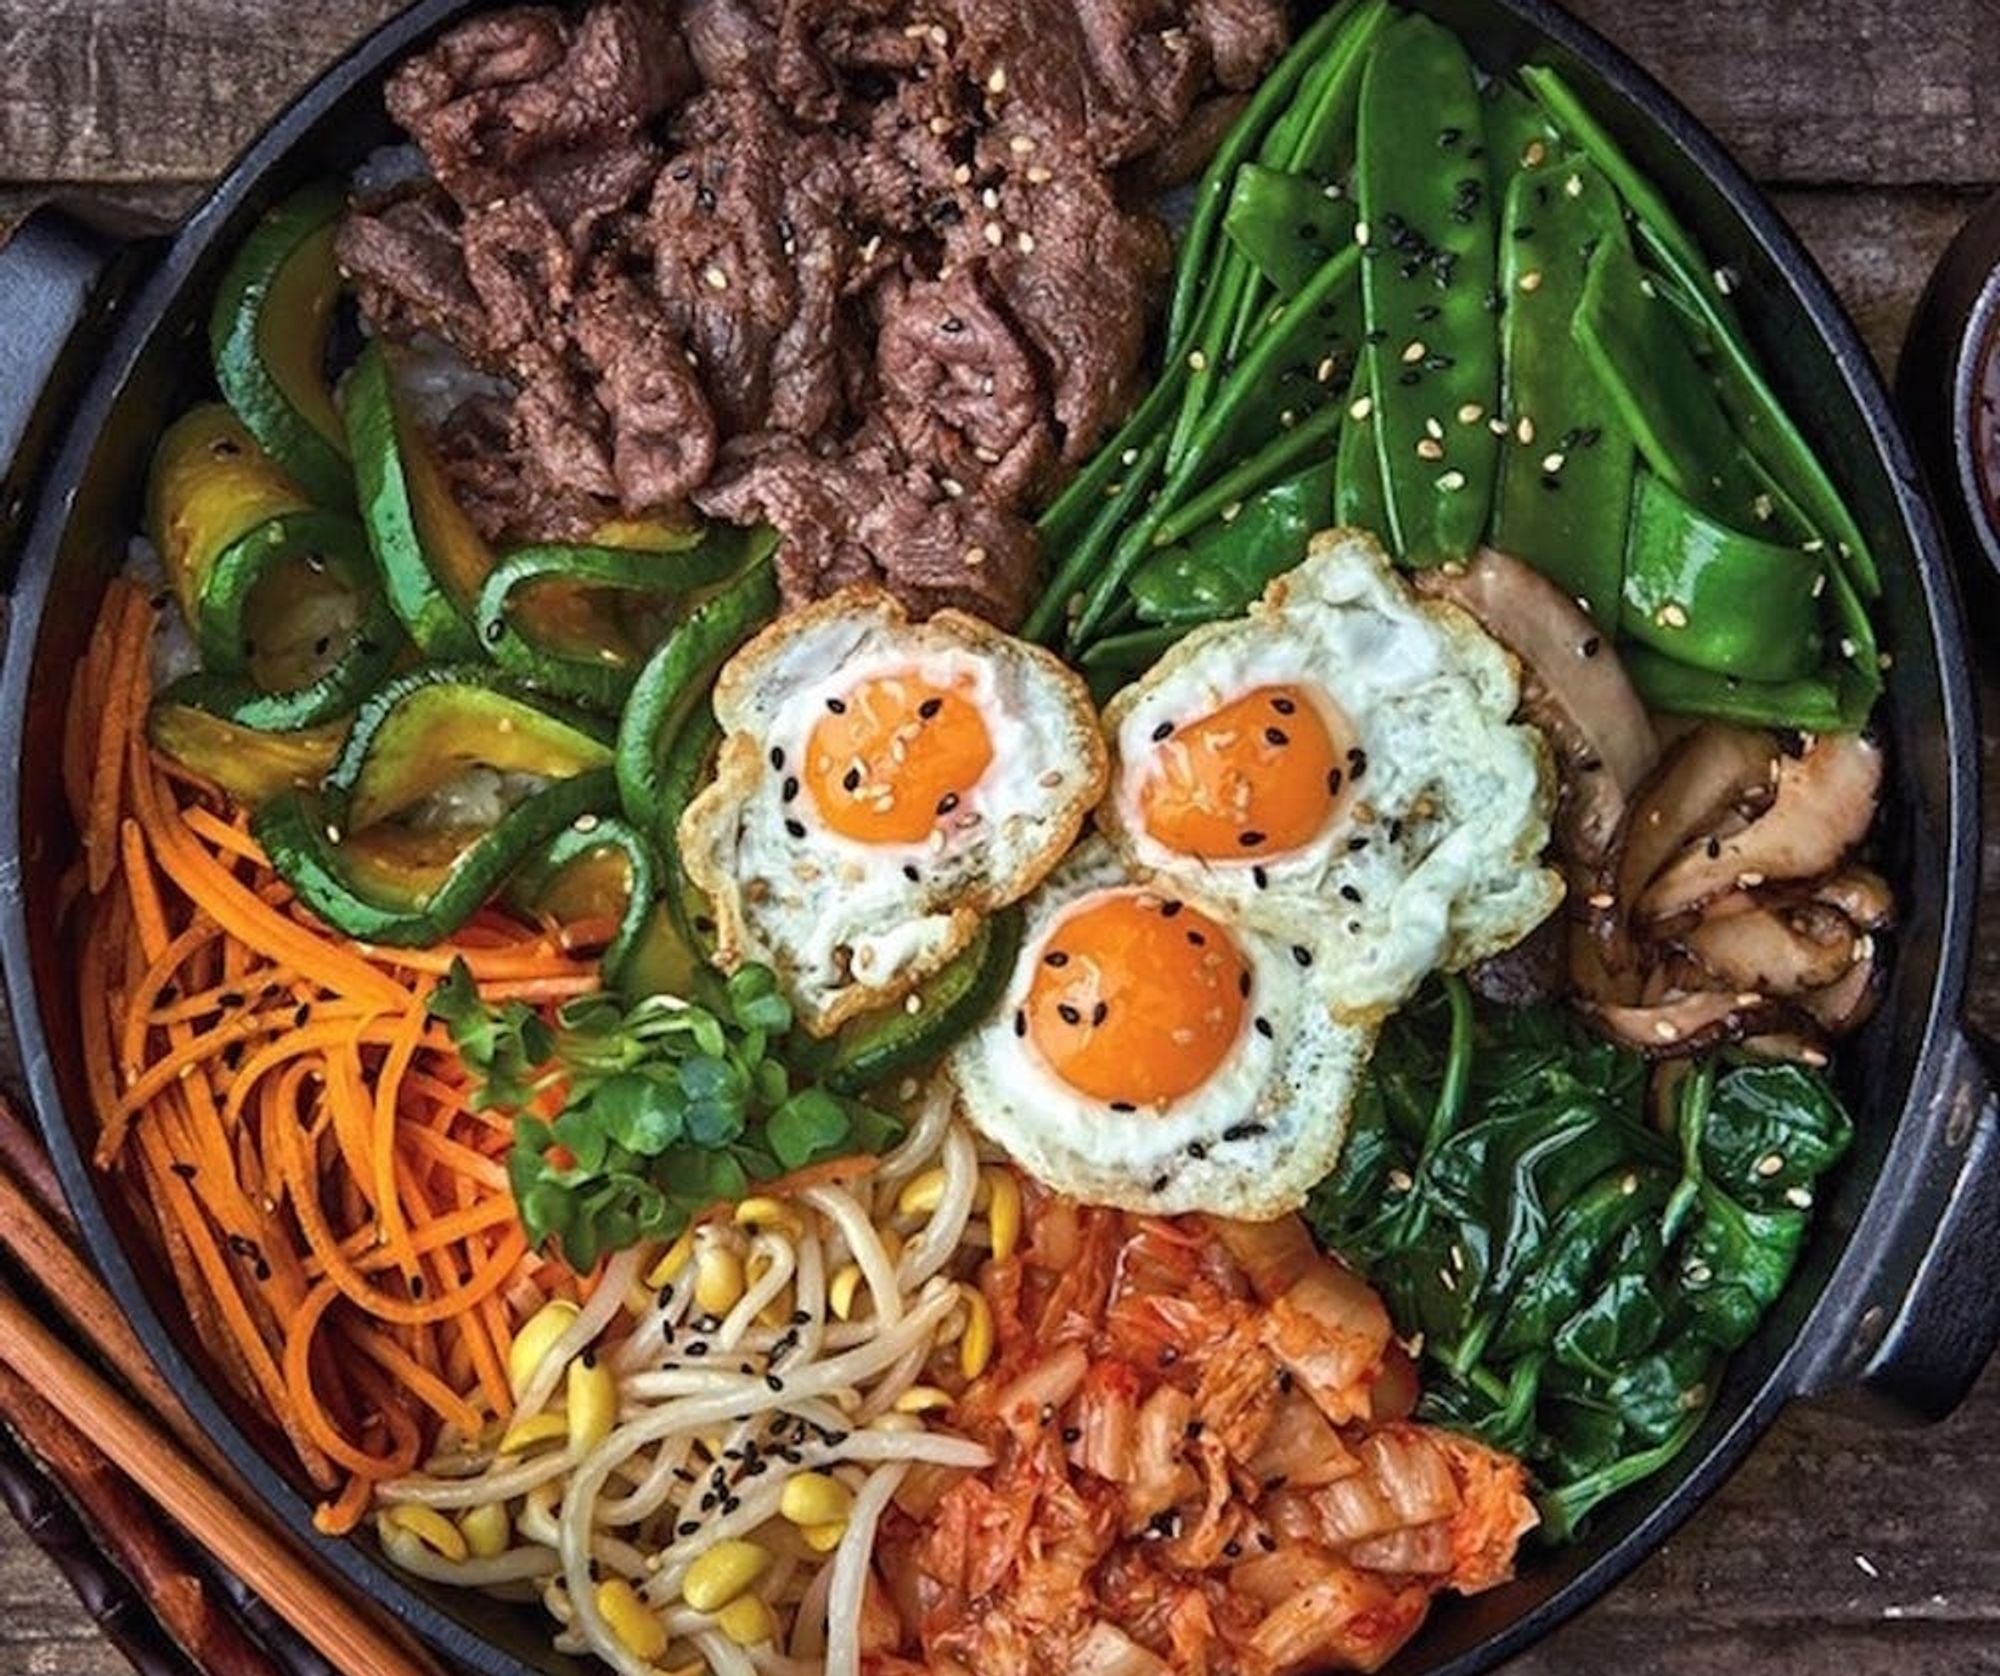 Korean Beef Meal Prep Bowls - Destination Delish